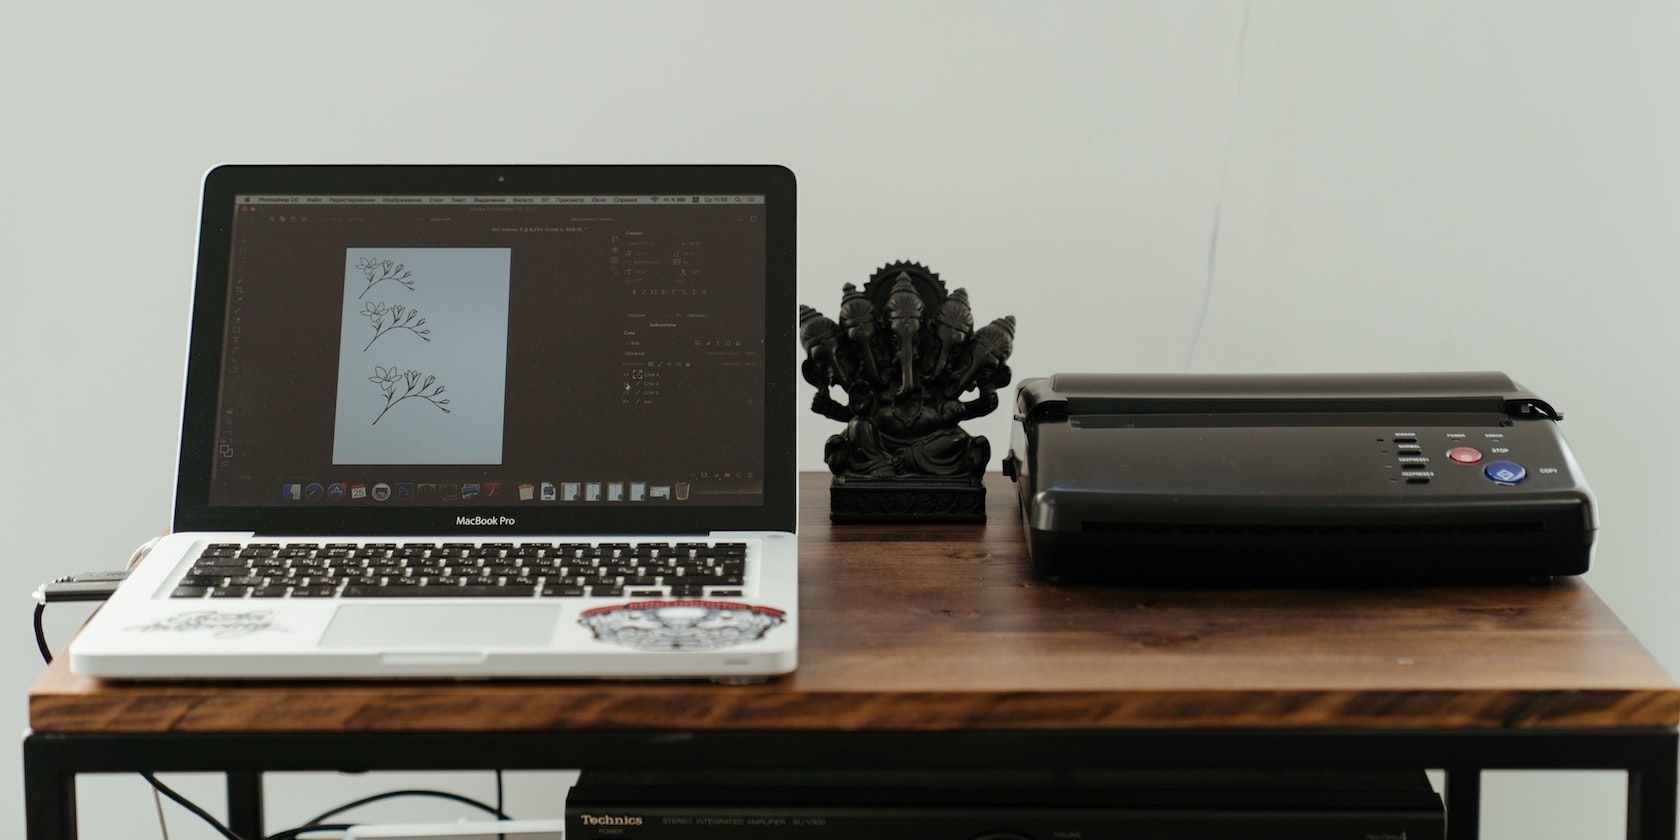 A printer sits beside a MacBook on a desk